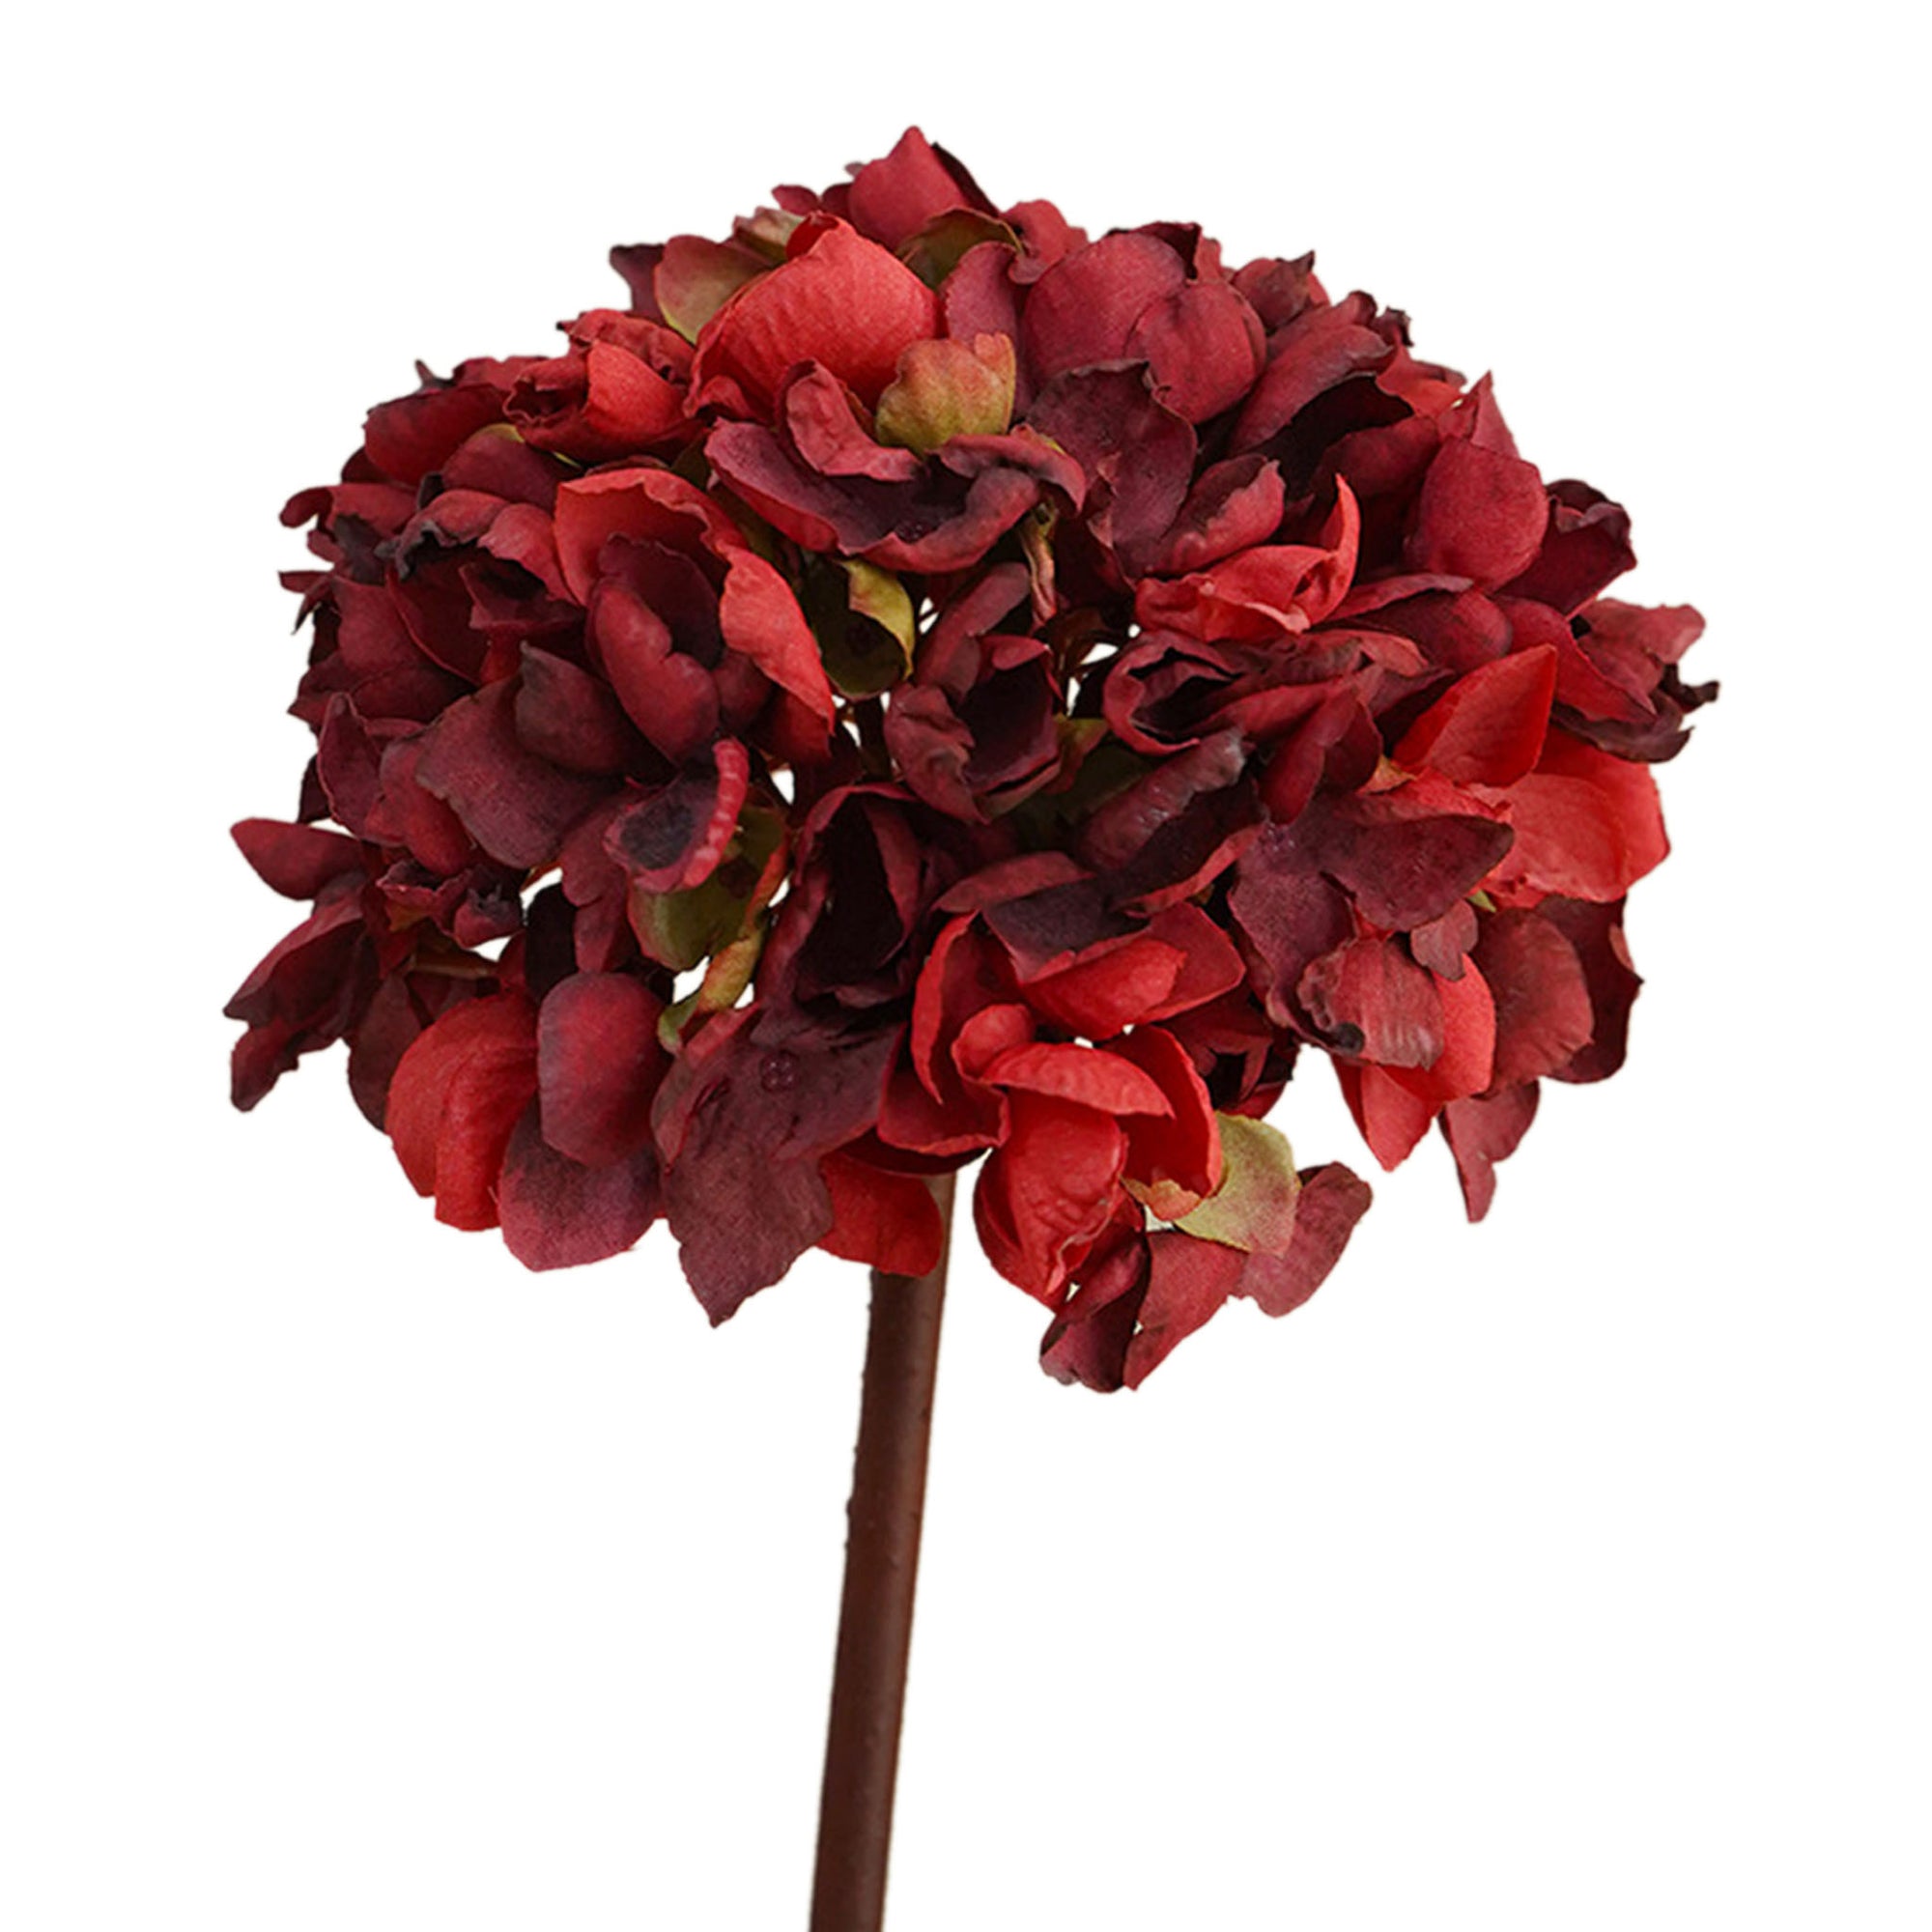 Fall Colors Hydrangea Faux Flowers Home Decor